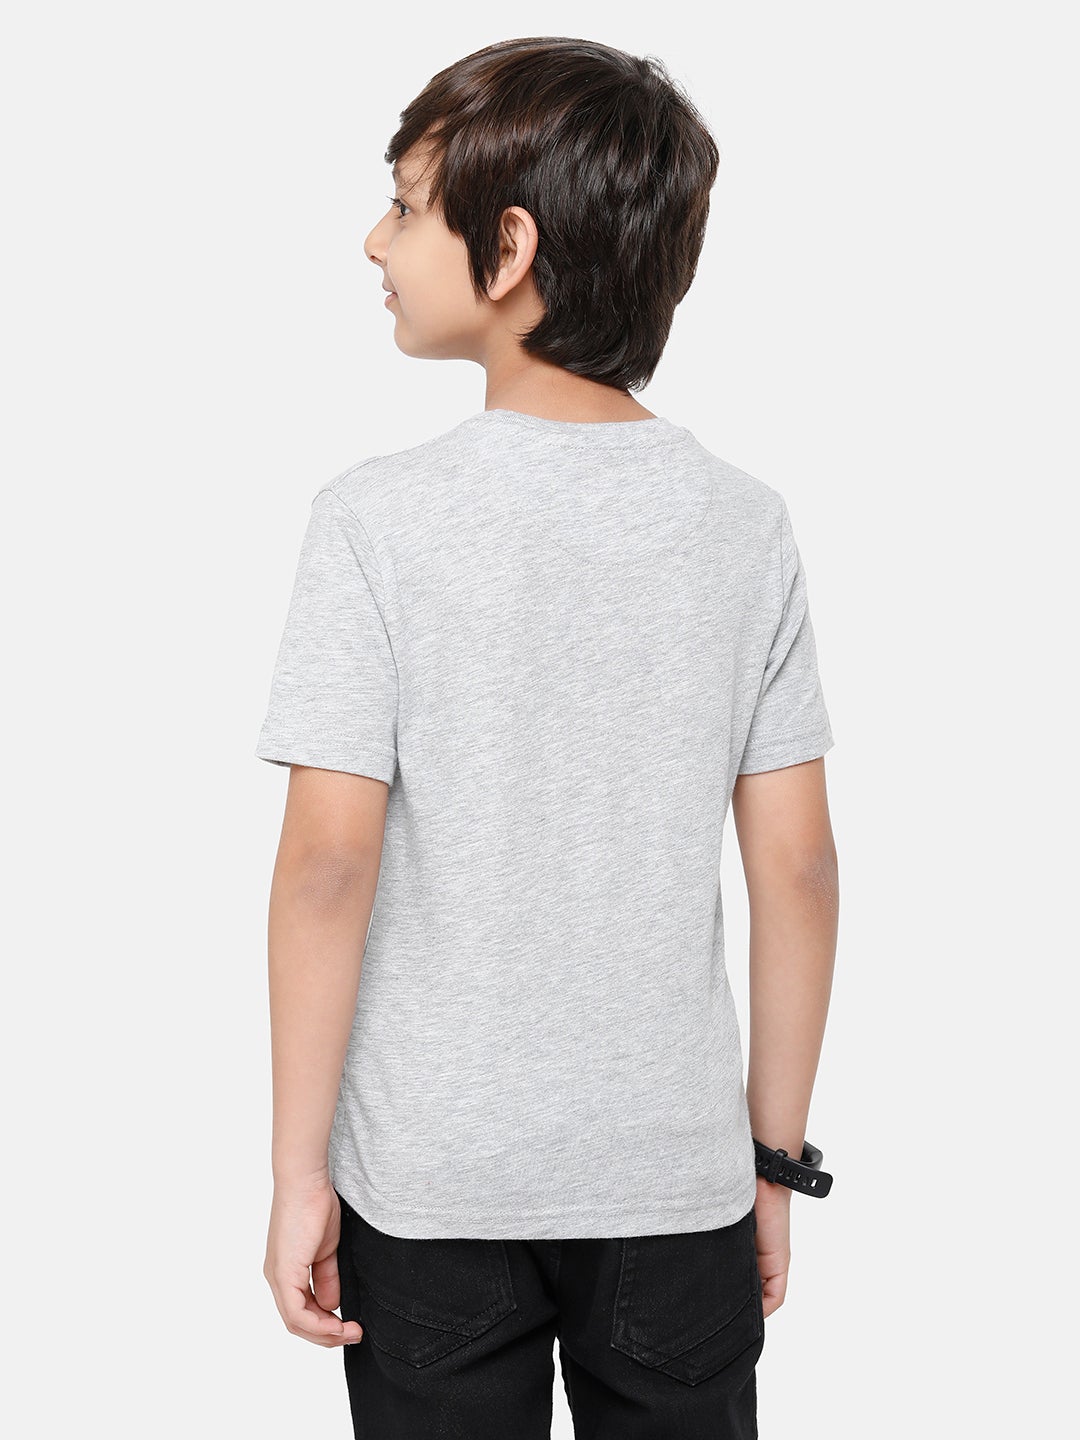 CP Boys Grey Printed Slim Fit Round Neck T-Shirt T-shirt Classic Polo 